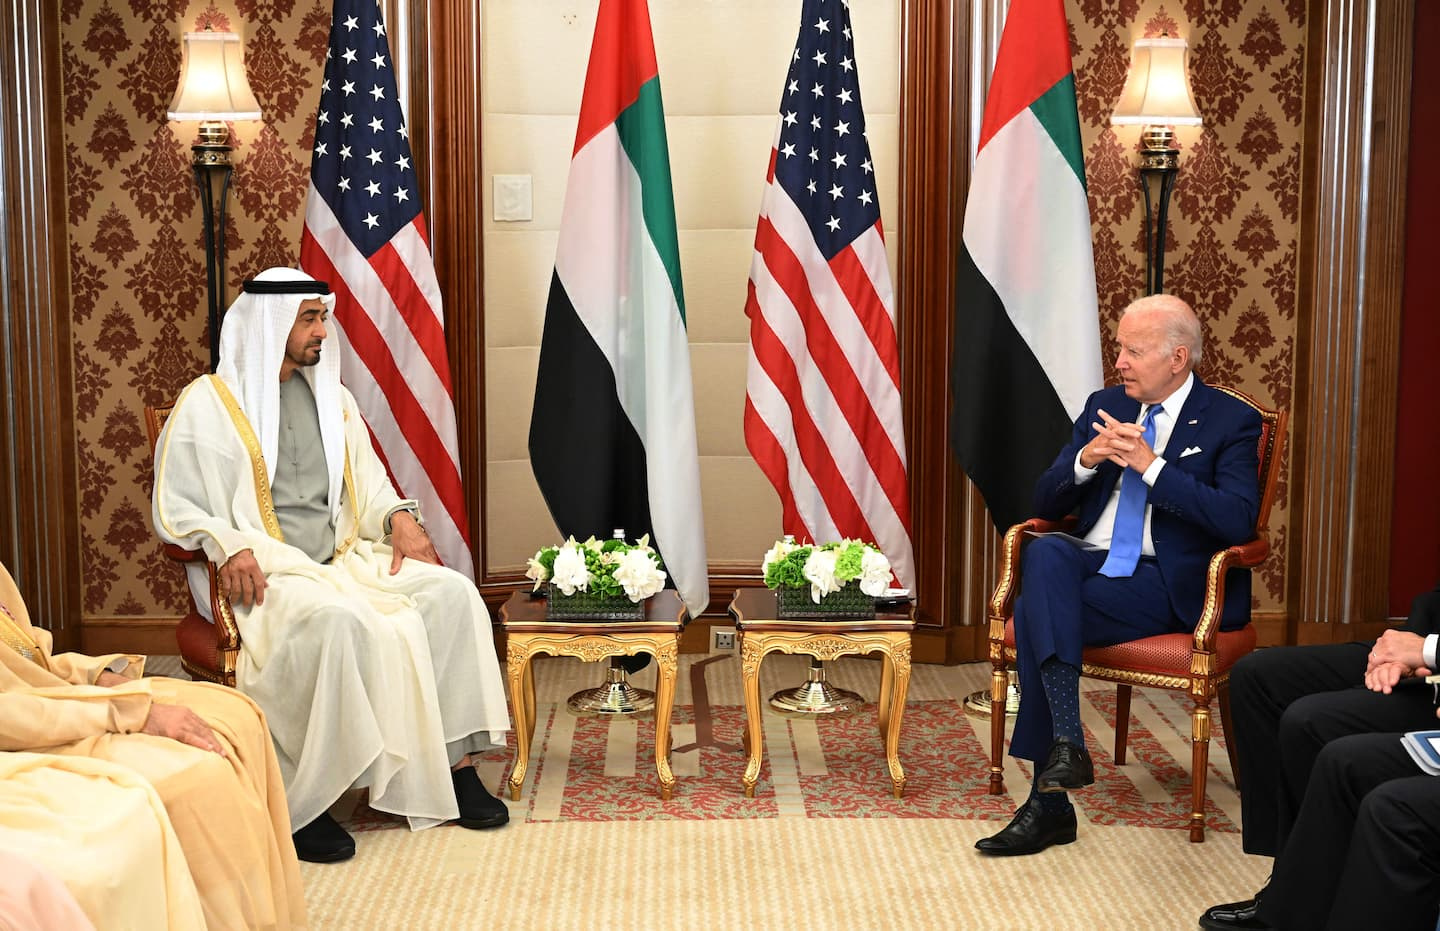 Biden invites the President of the United Arab Emirates to the United States